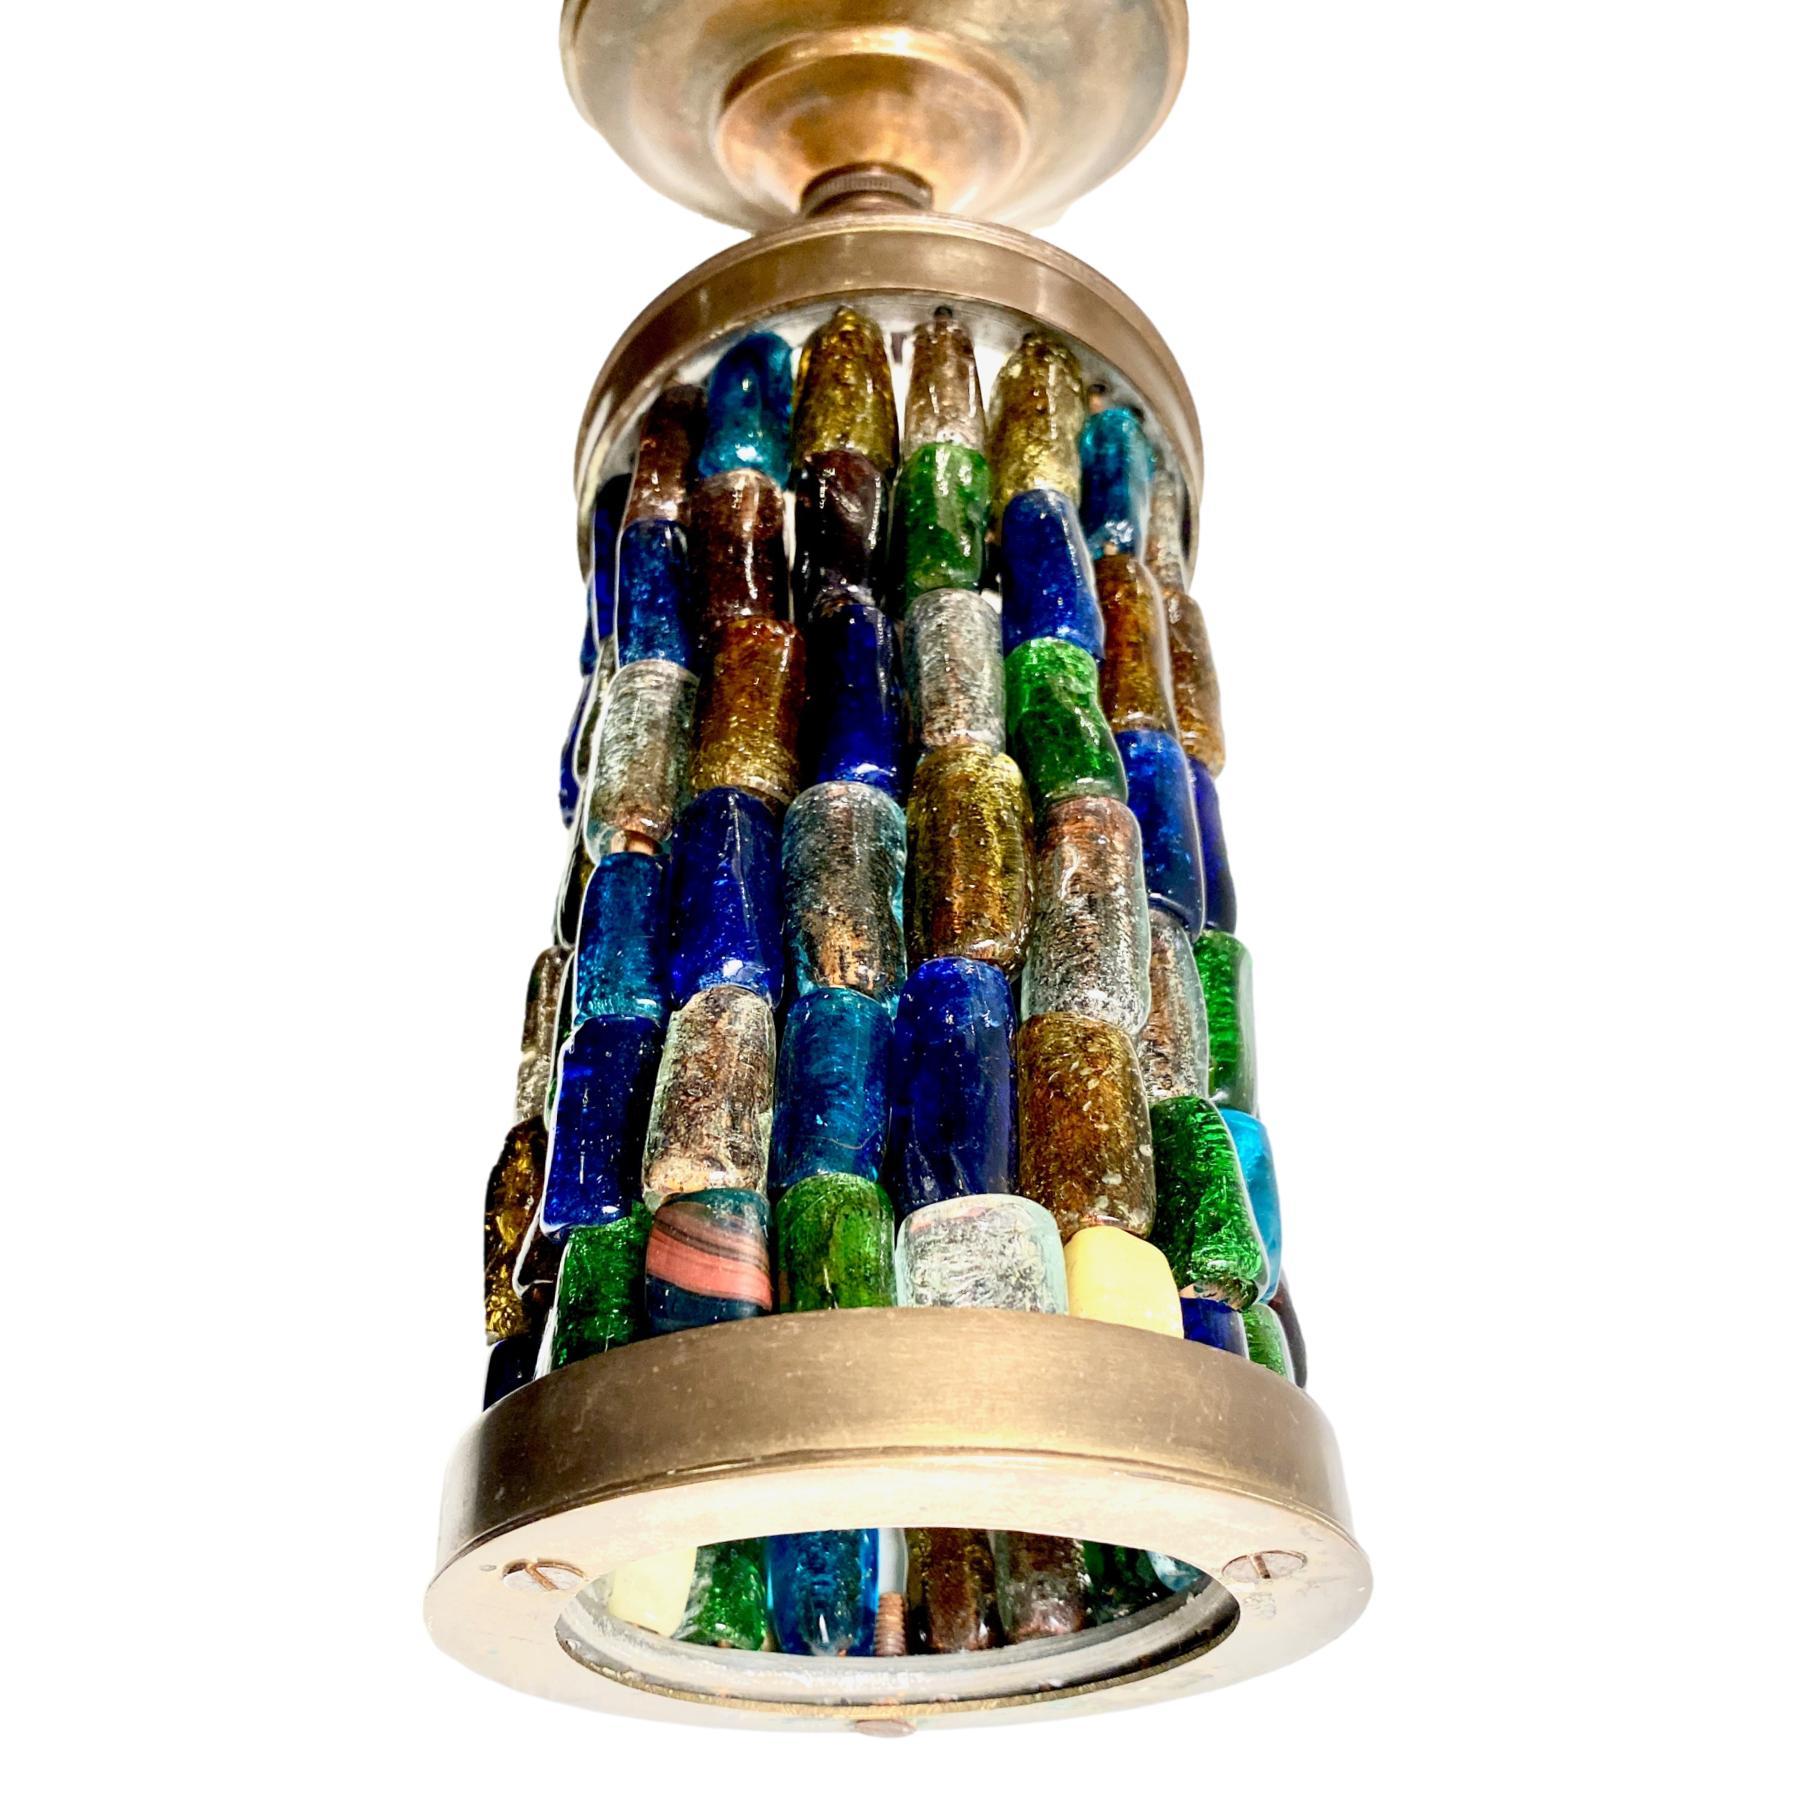 An American circa 1950 art glass lantern with an interior light. 

Measurements:
Drop 13.5